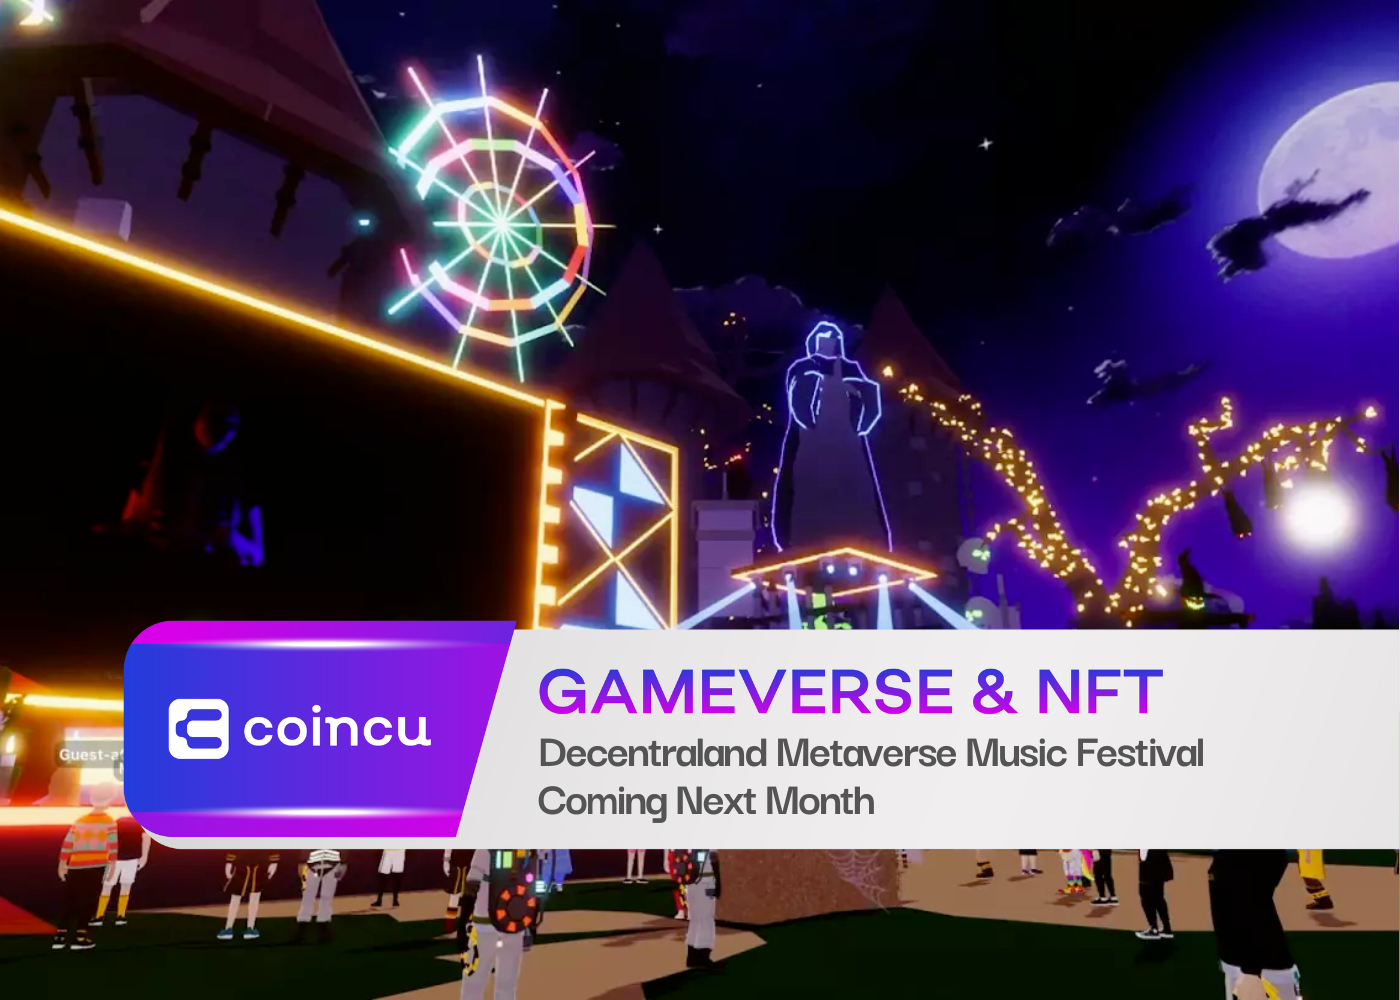 Decentraland Metaverse Music Festival Coming Next Month